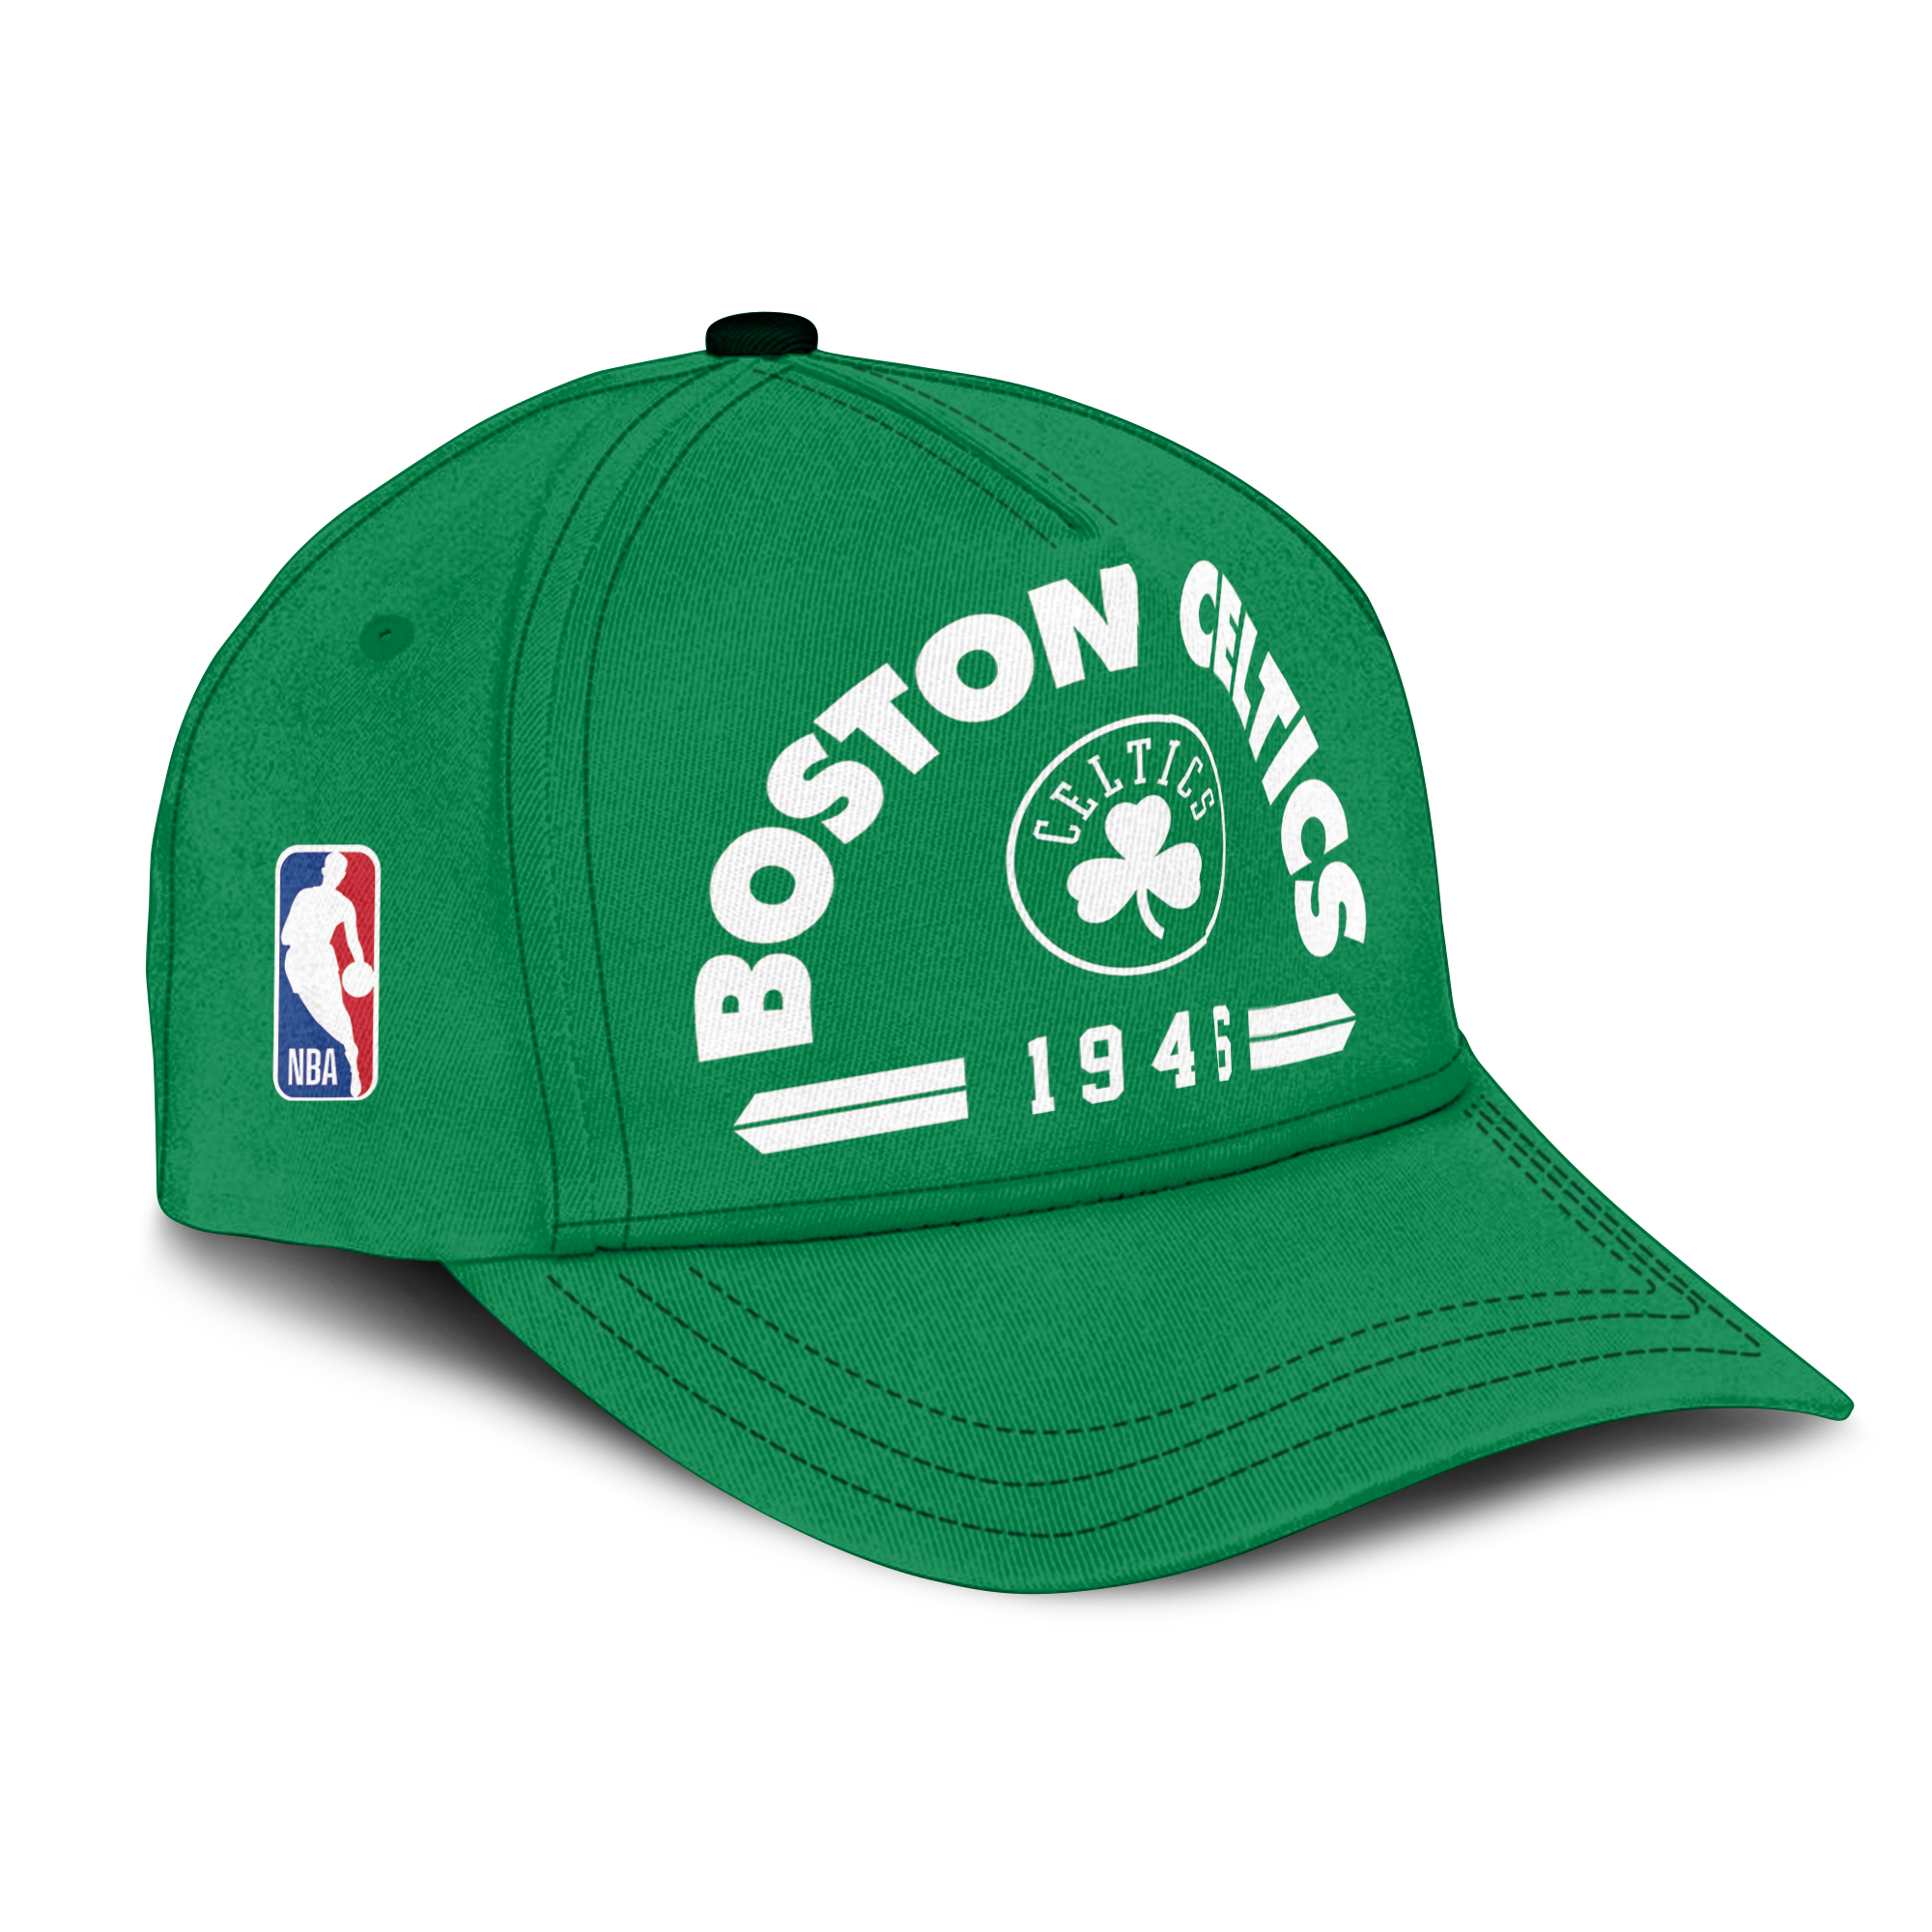 Adidas Originals Boston Celtics 1946 Track Jacket